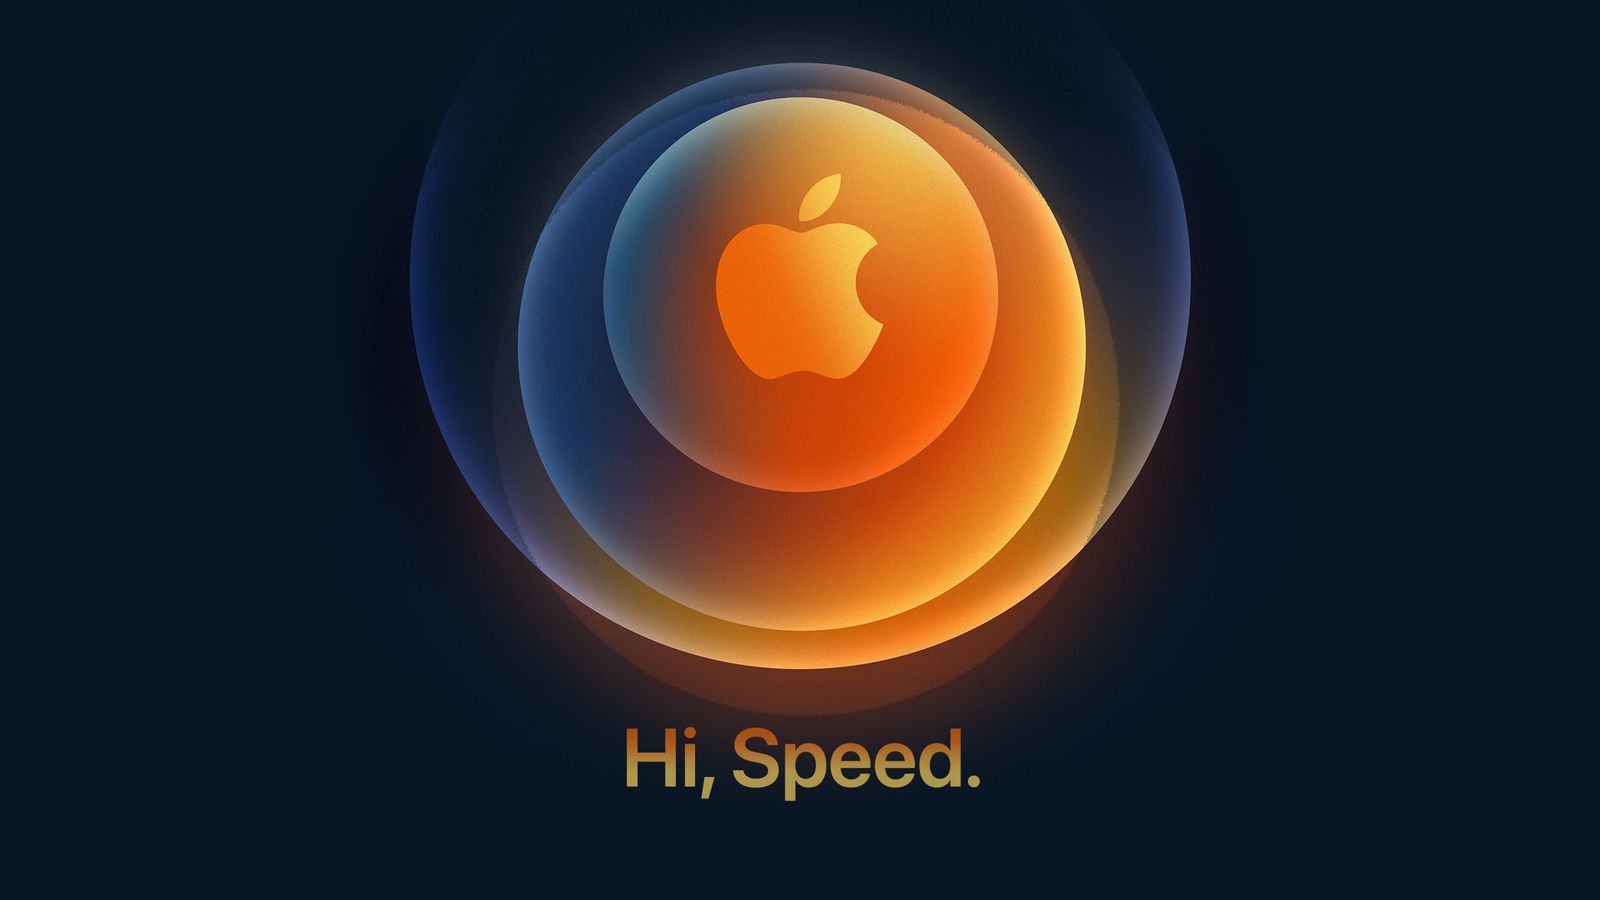 Apple Event: Last Minute iPhone 12 Rumors and a Back - MacRumors